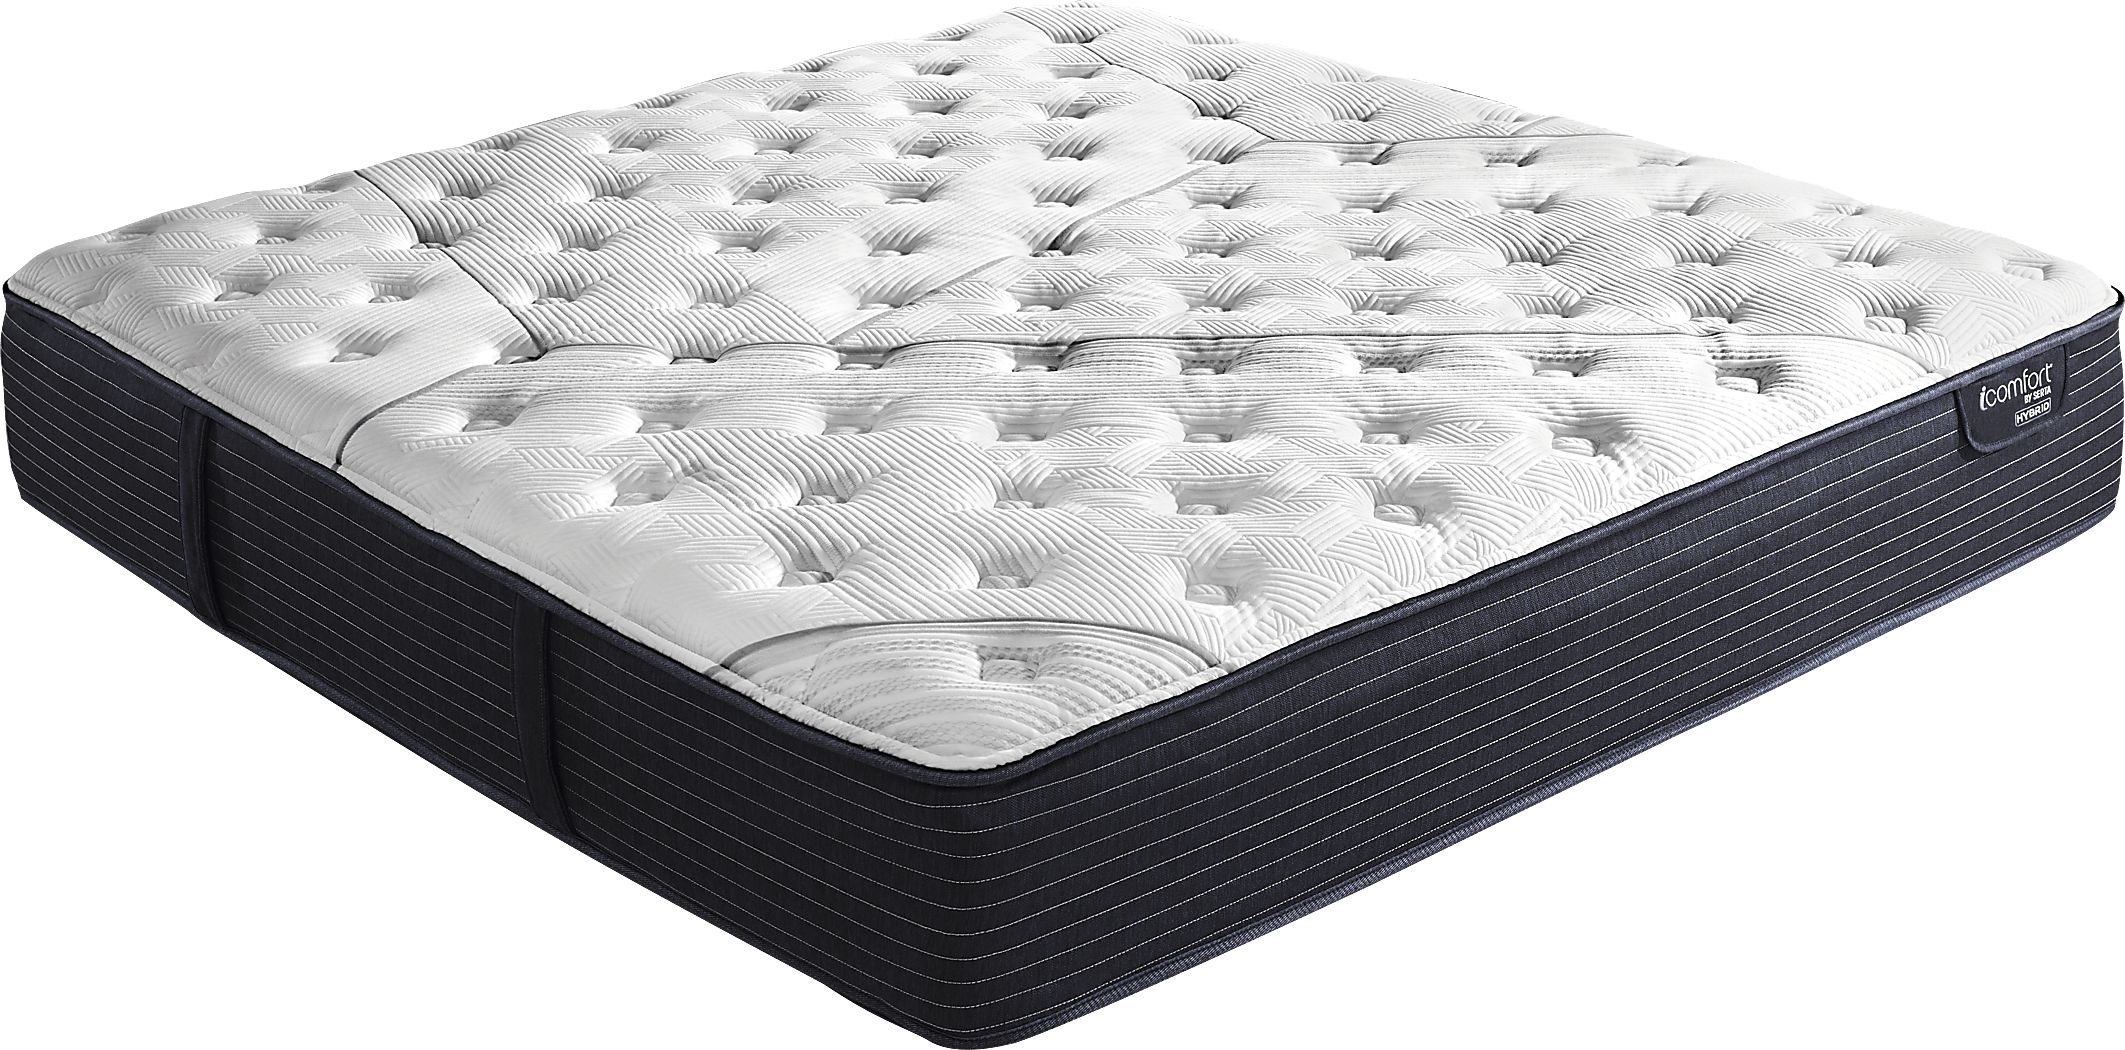 california king icomfort mattress